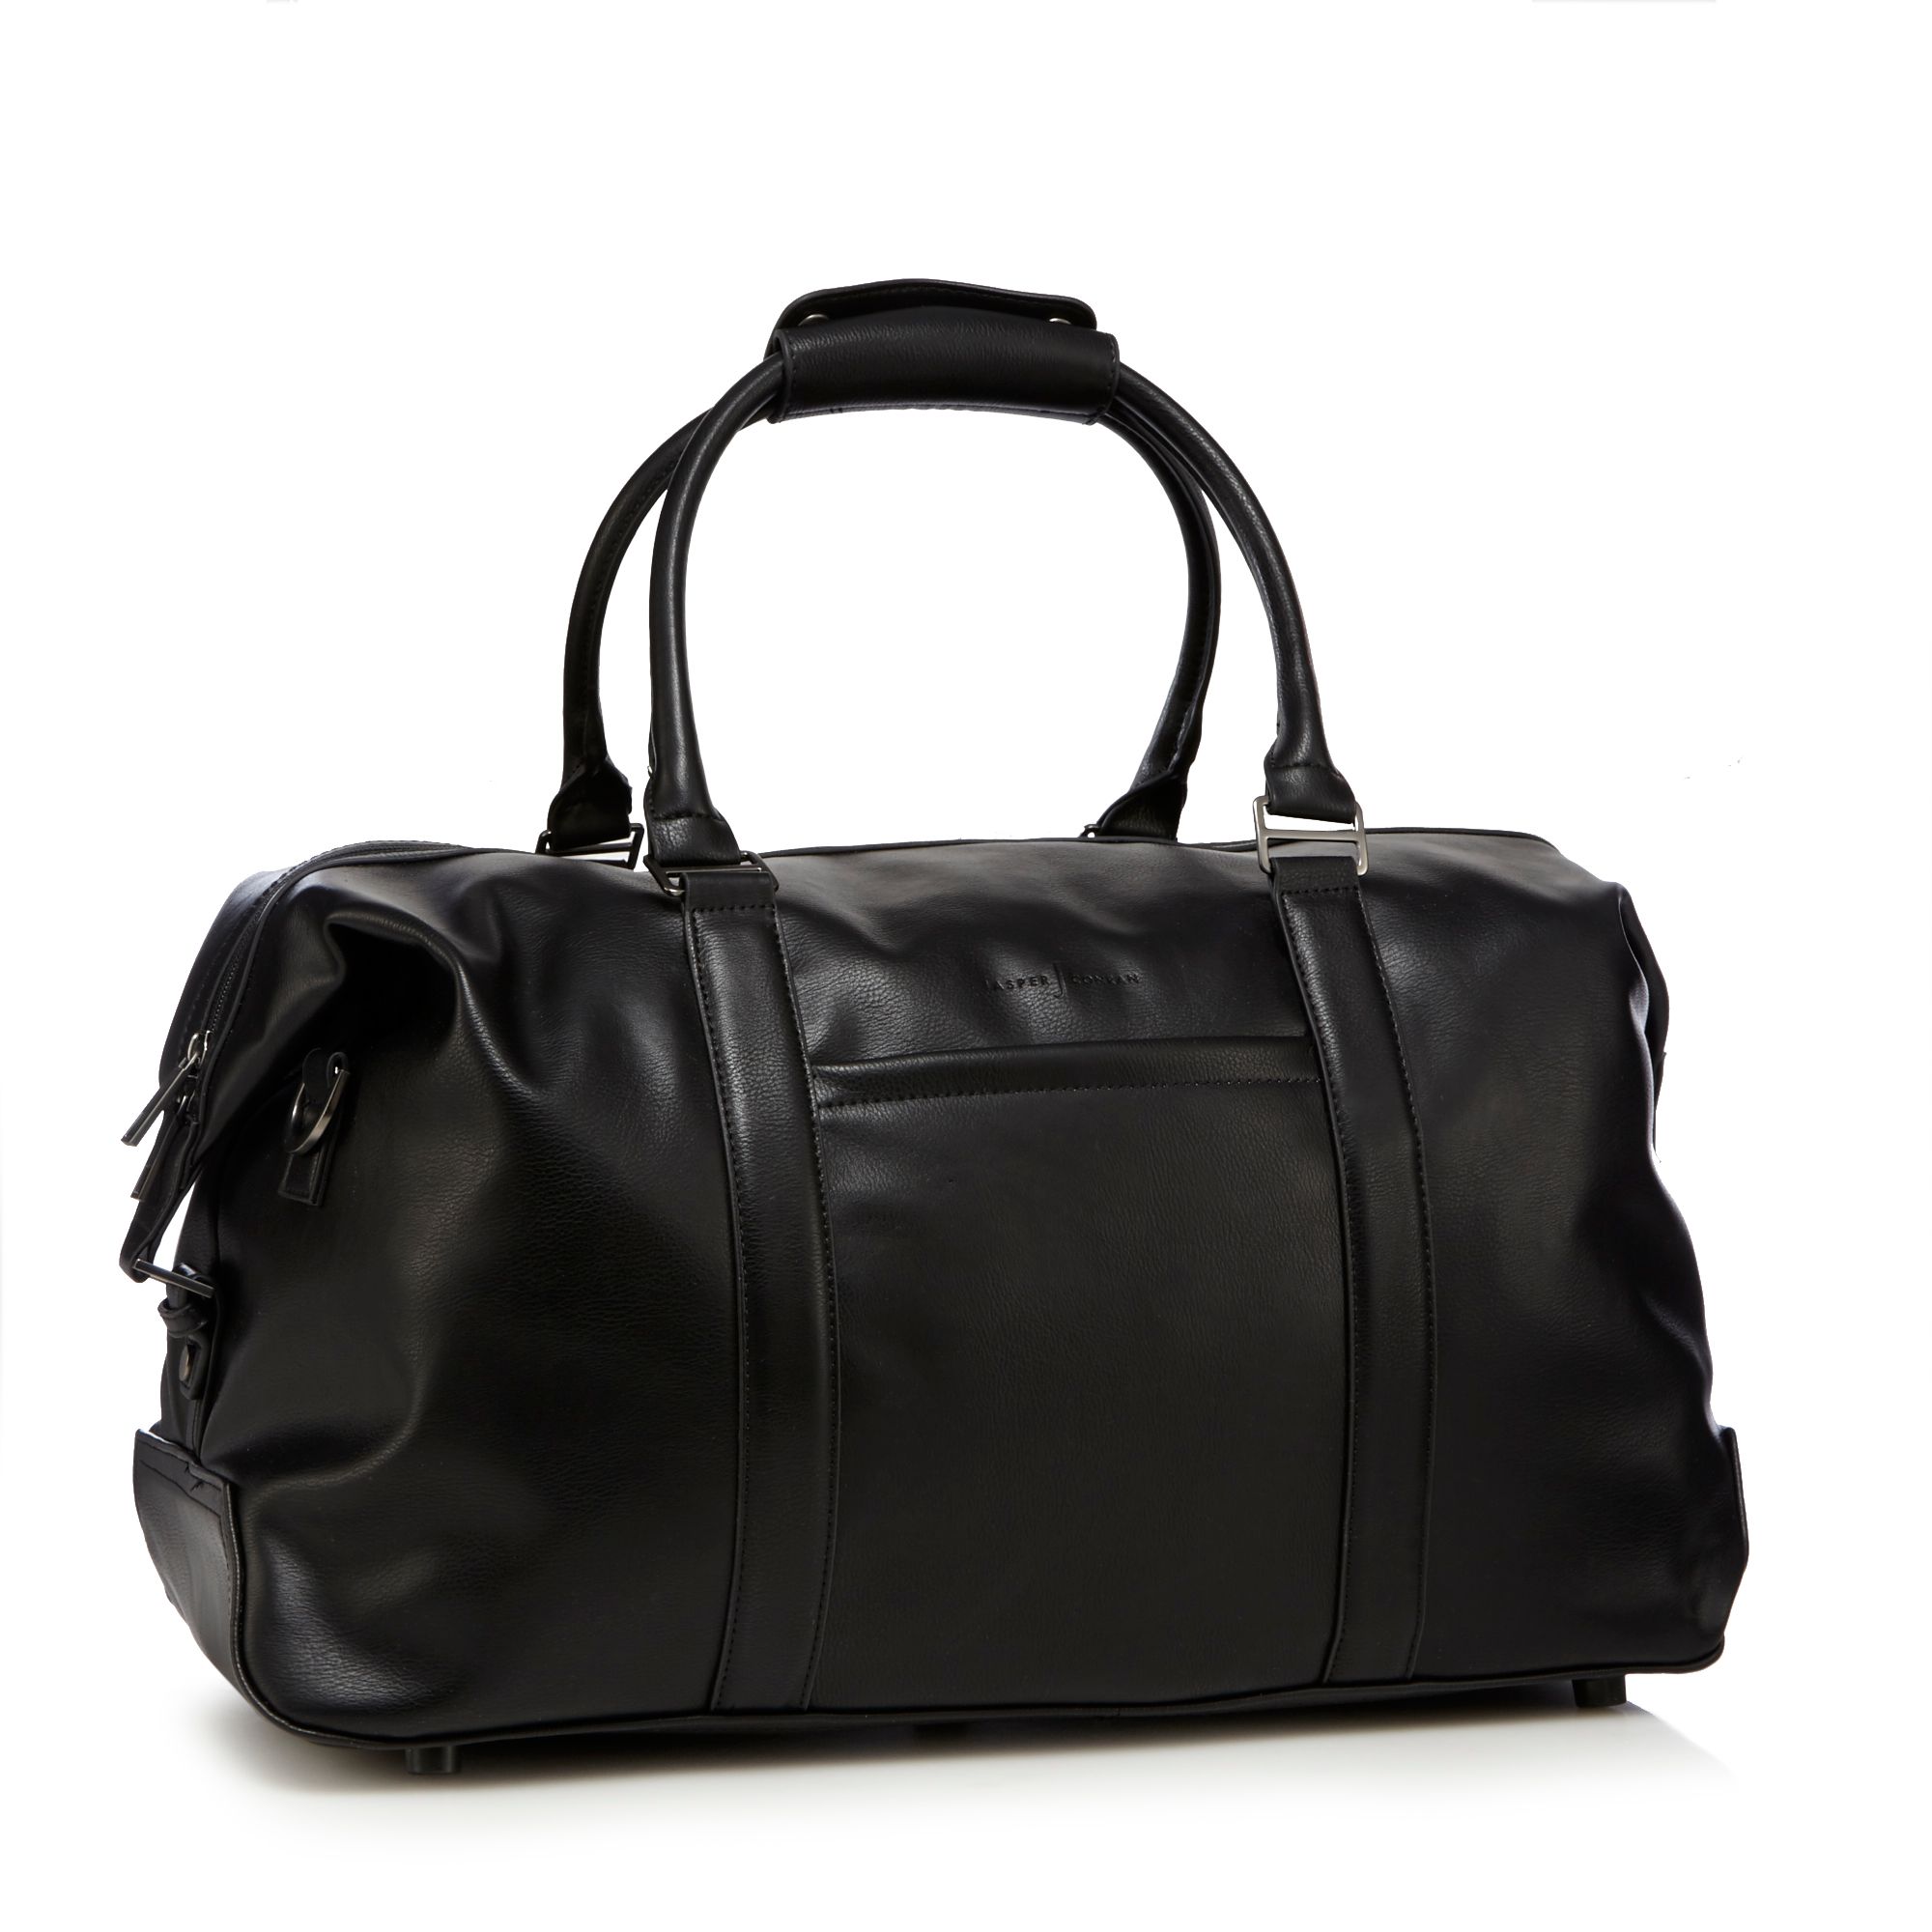 J By Jasper Conran Mens Black Large Holdall Bag From Debenhams | eBay